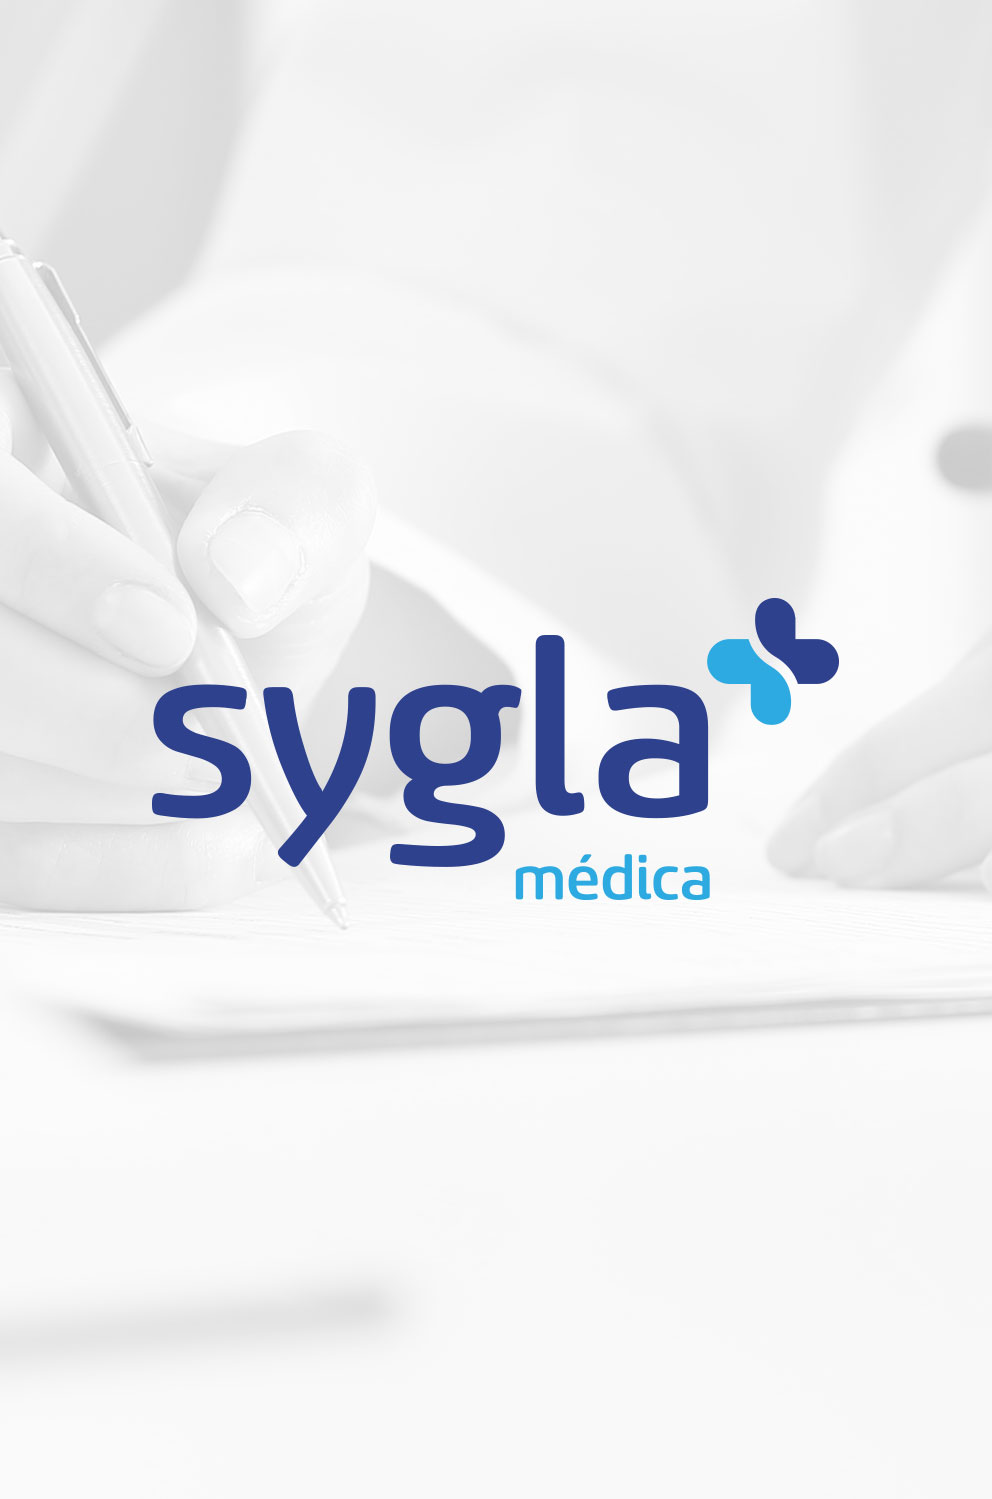 sygla-press8-logo2